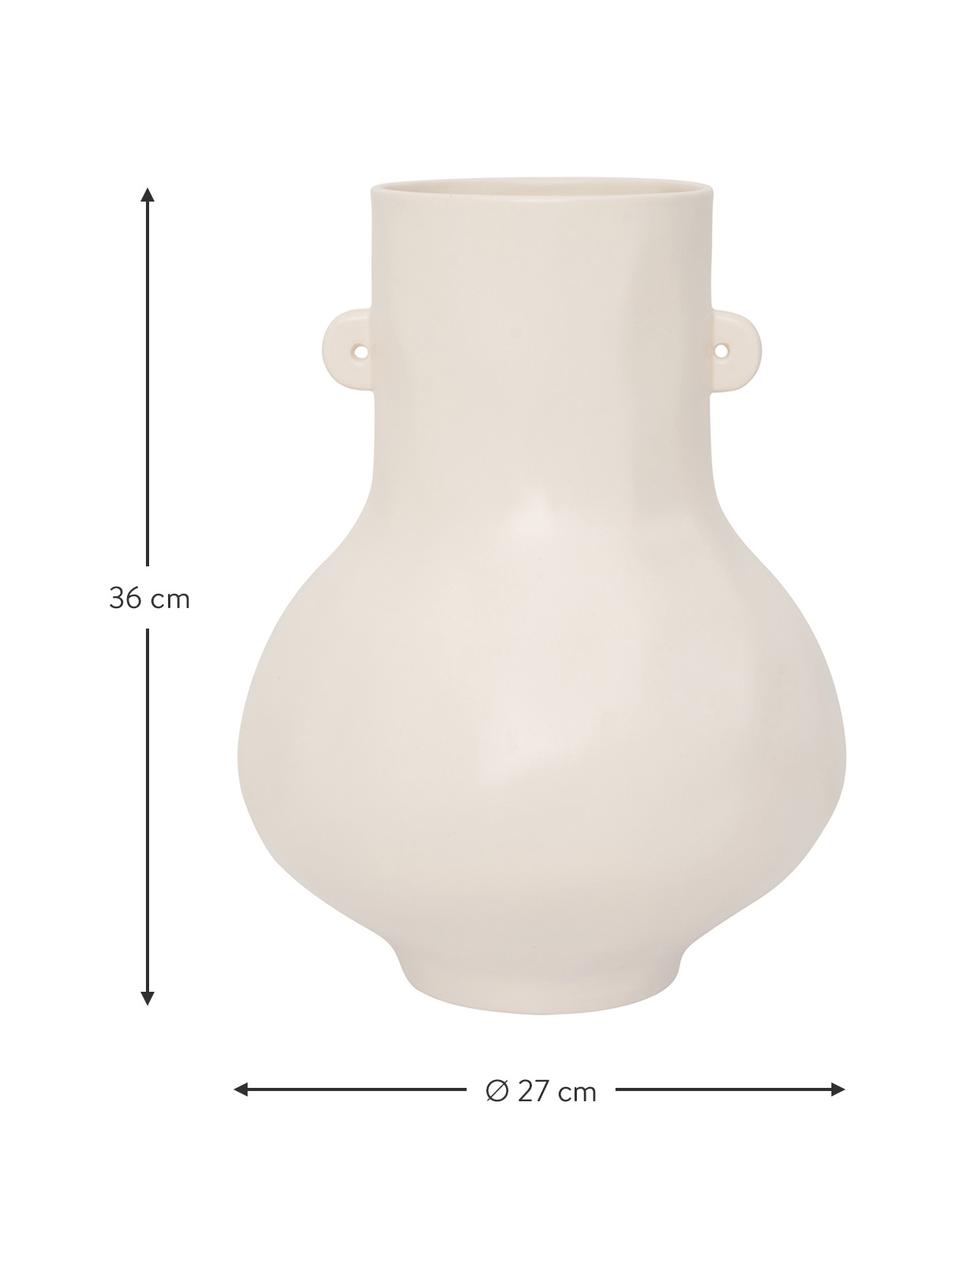 Handgemaakte keramische vaas Still in wit, Keramiek, Gebroken wit, Ø 27 x H 36 cm